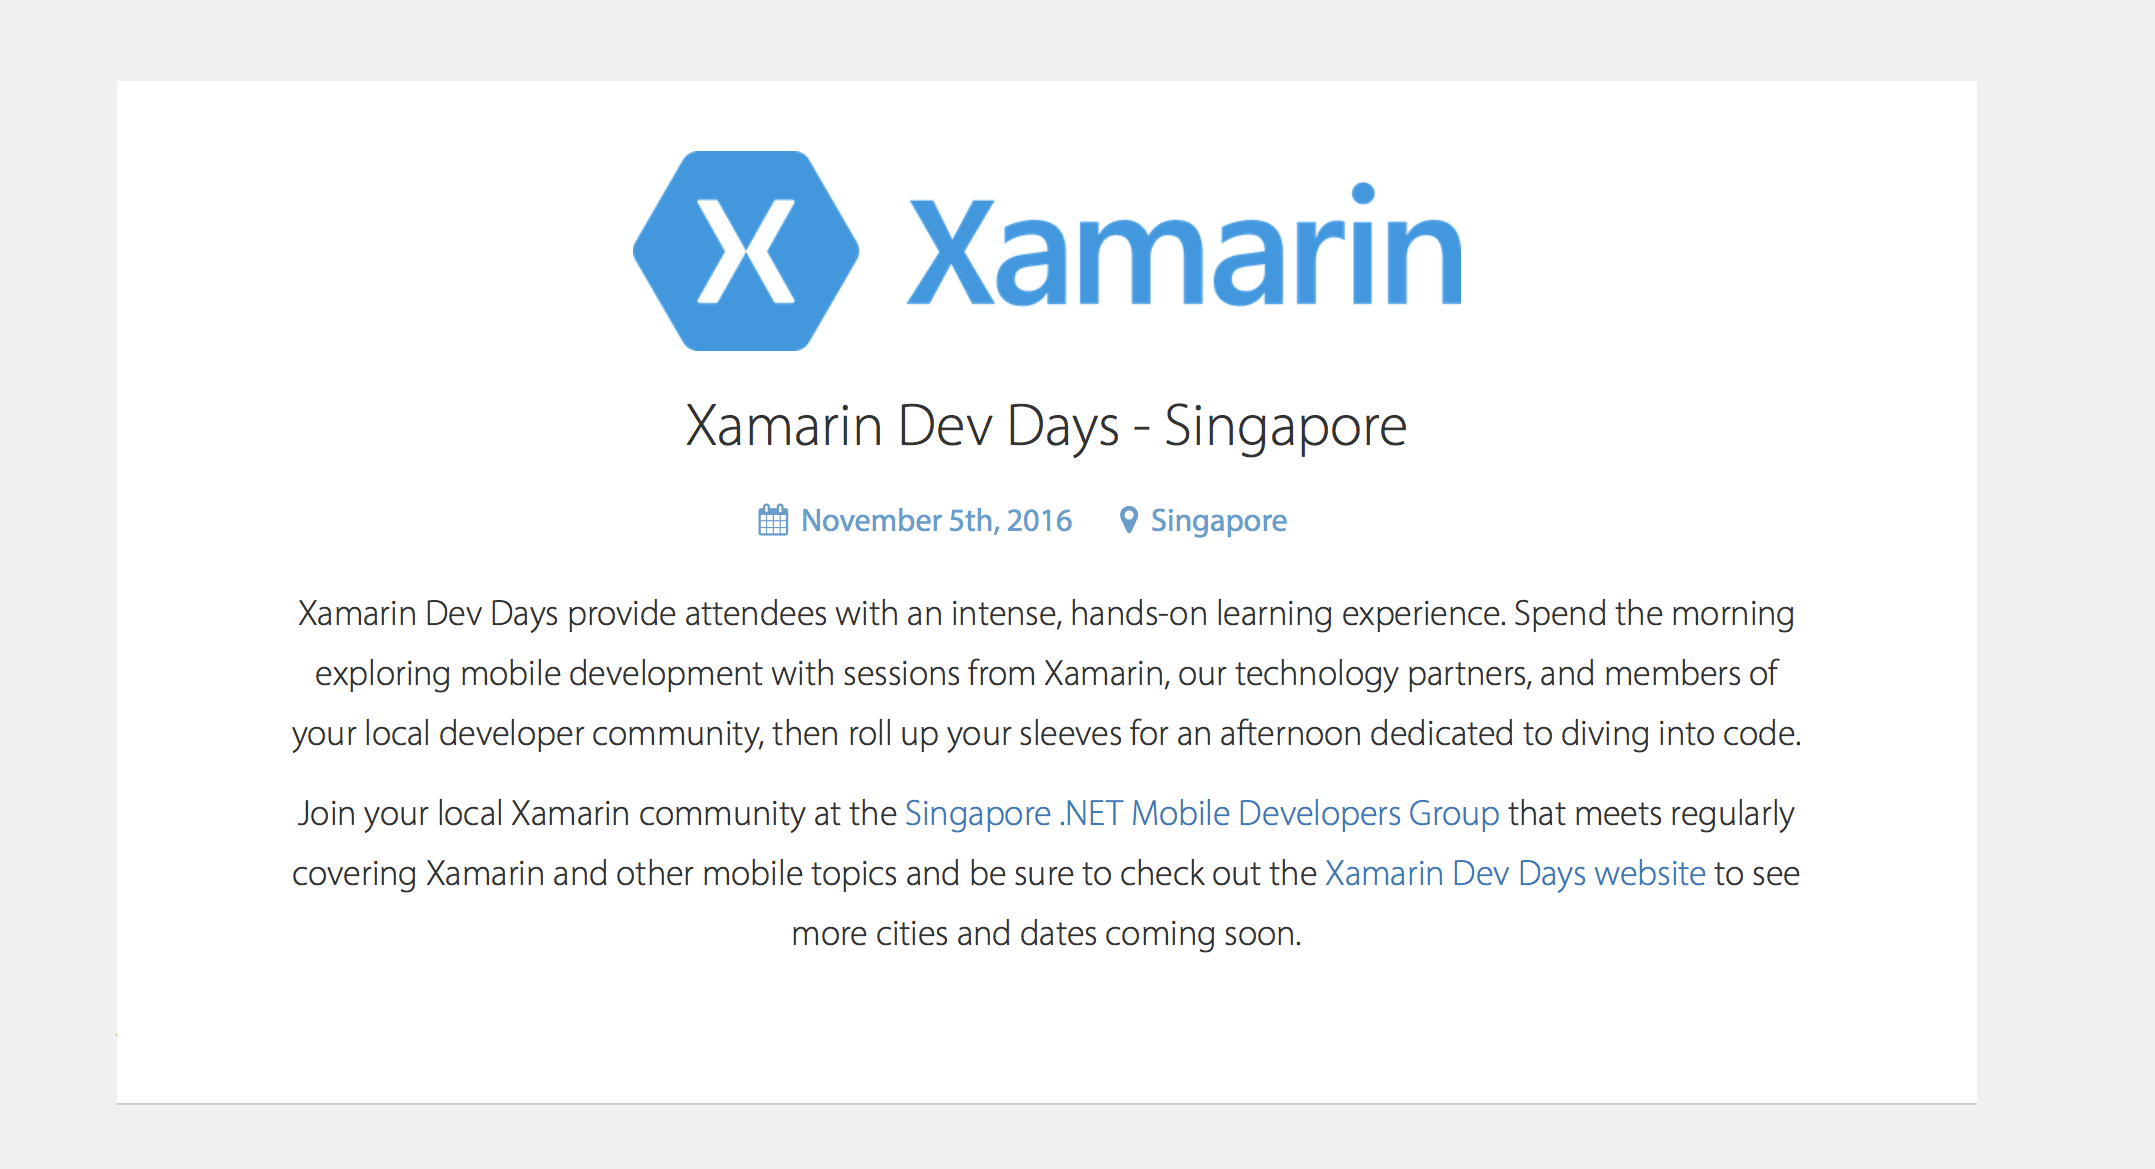 I will be at Xamarin Dev Days Singapore